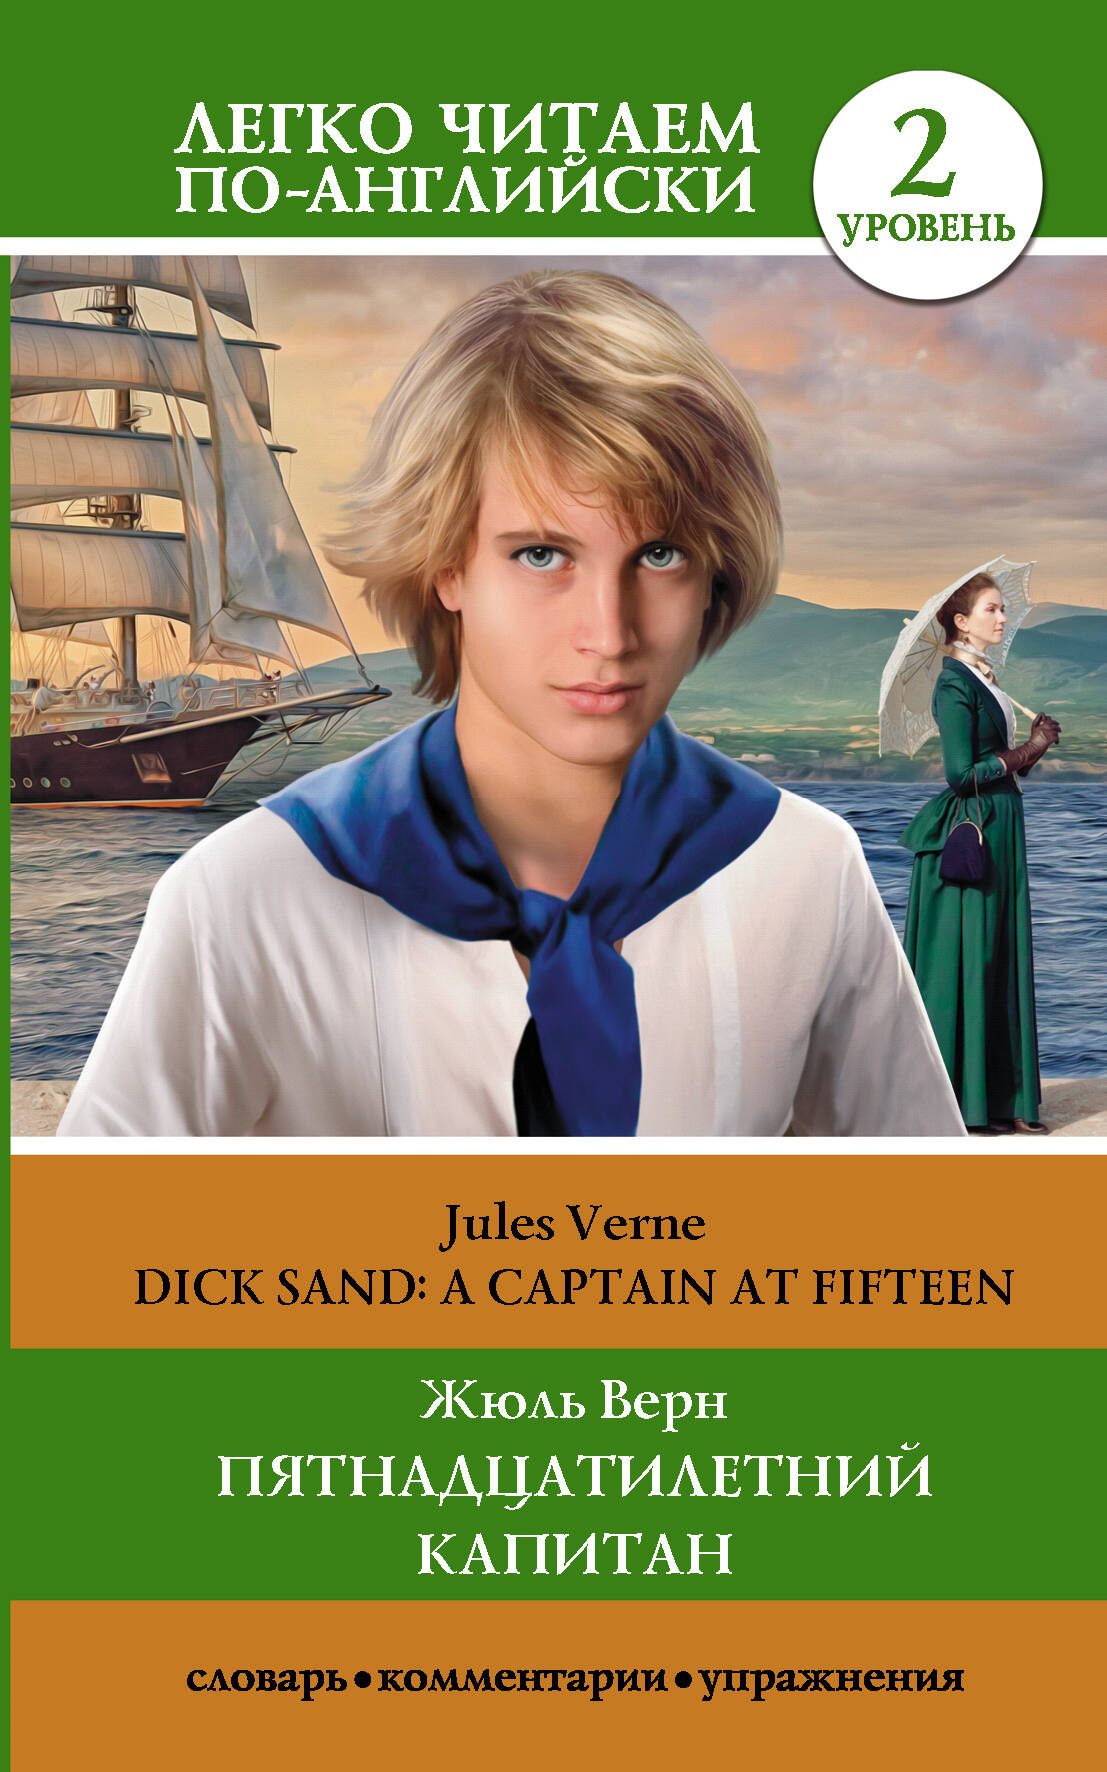 Верн Жюль Пятнадцатилетний капитан. Уровень 2 - страница 0